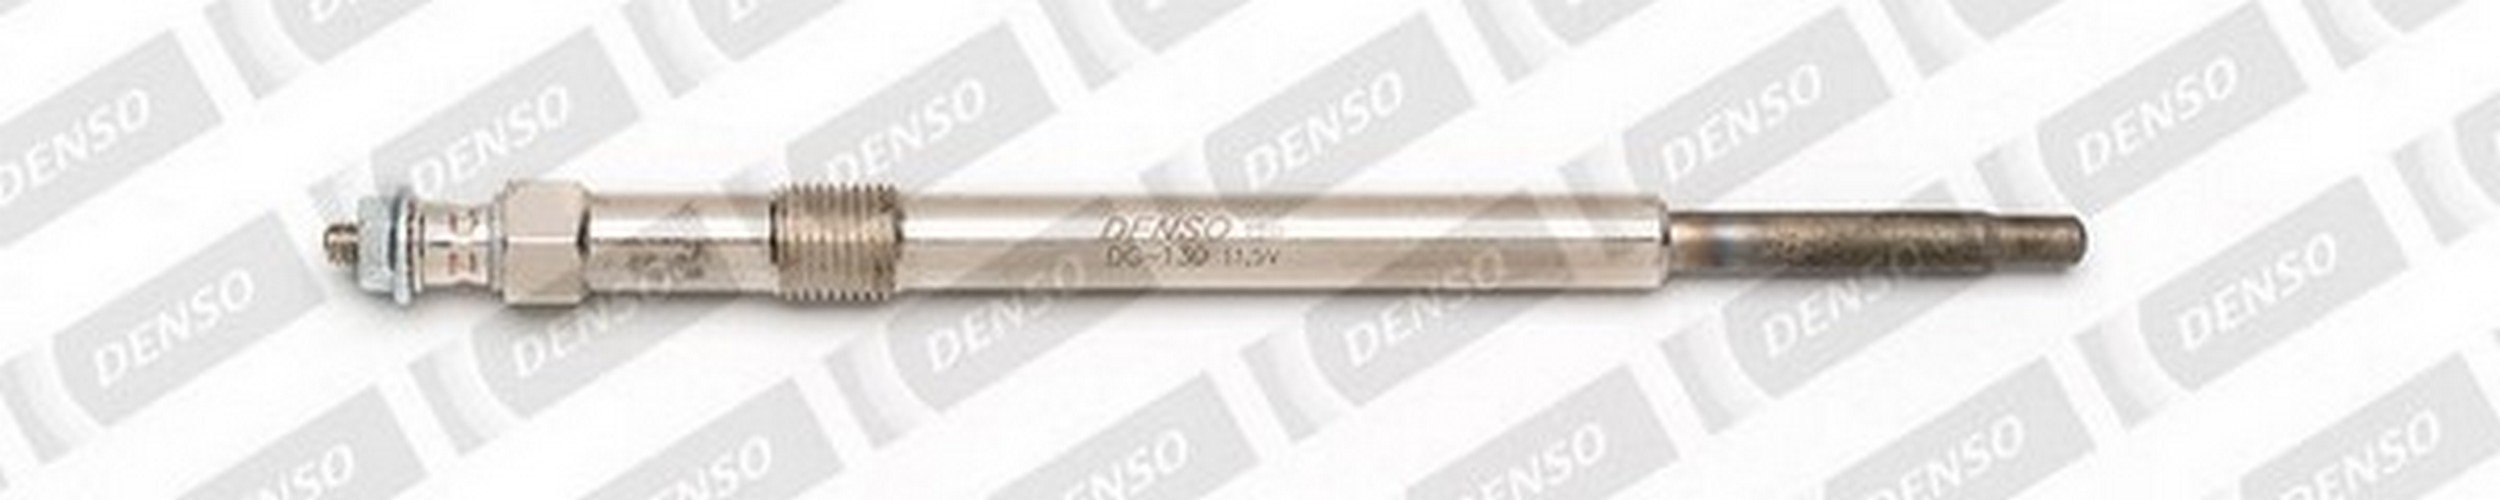 DENSO-AU DG-130